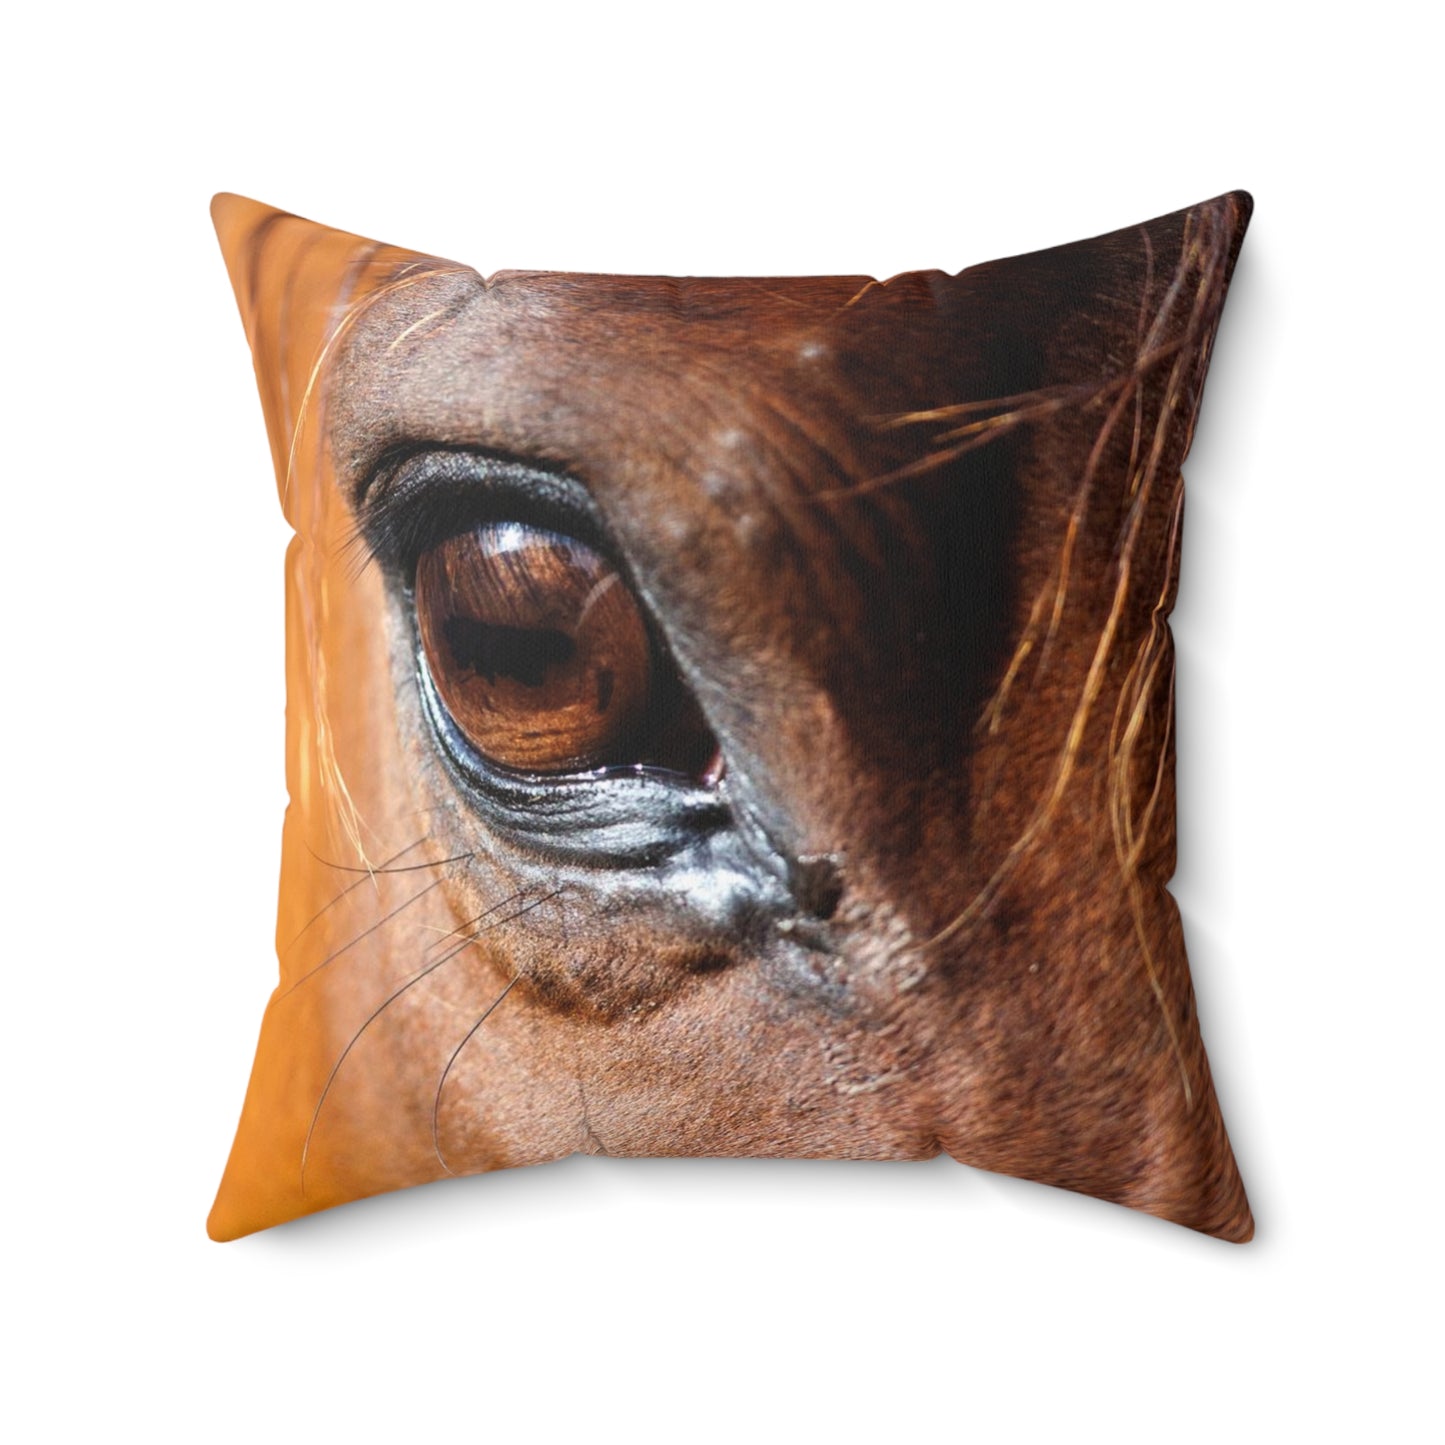 Horse close up Spun Polyester Square Pillow